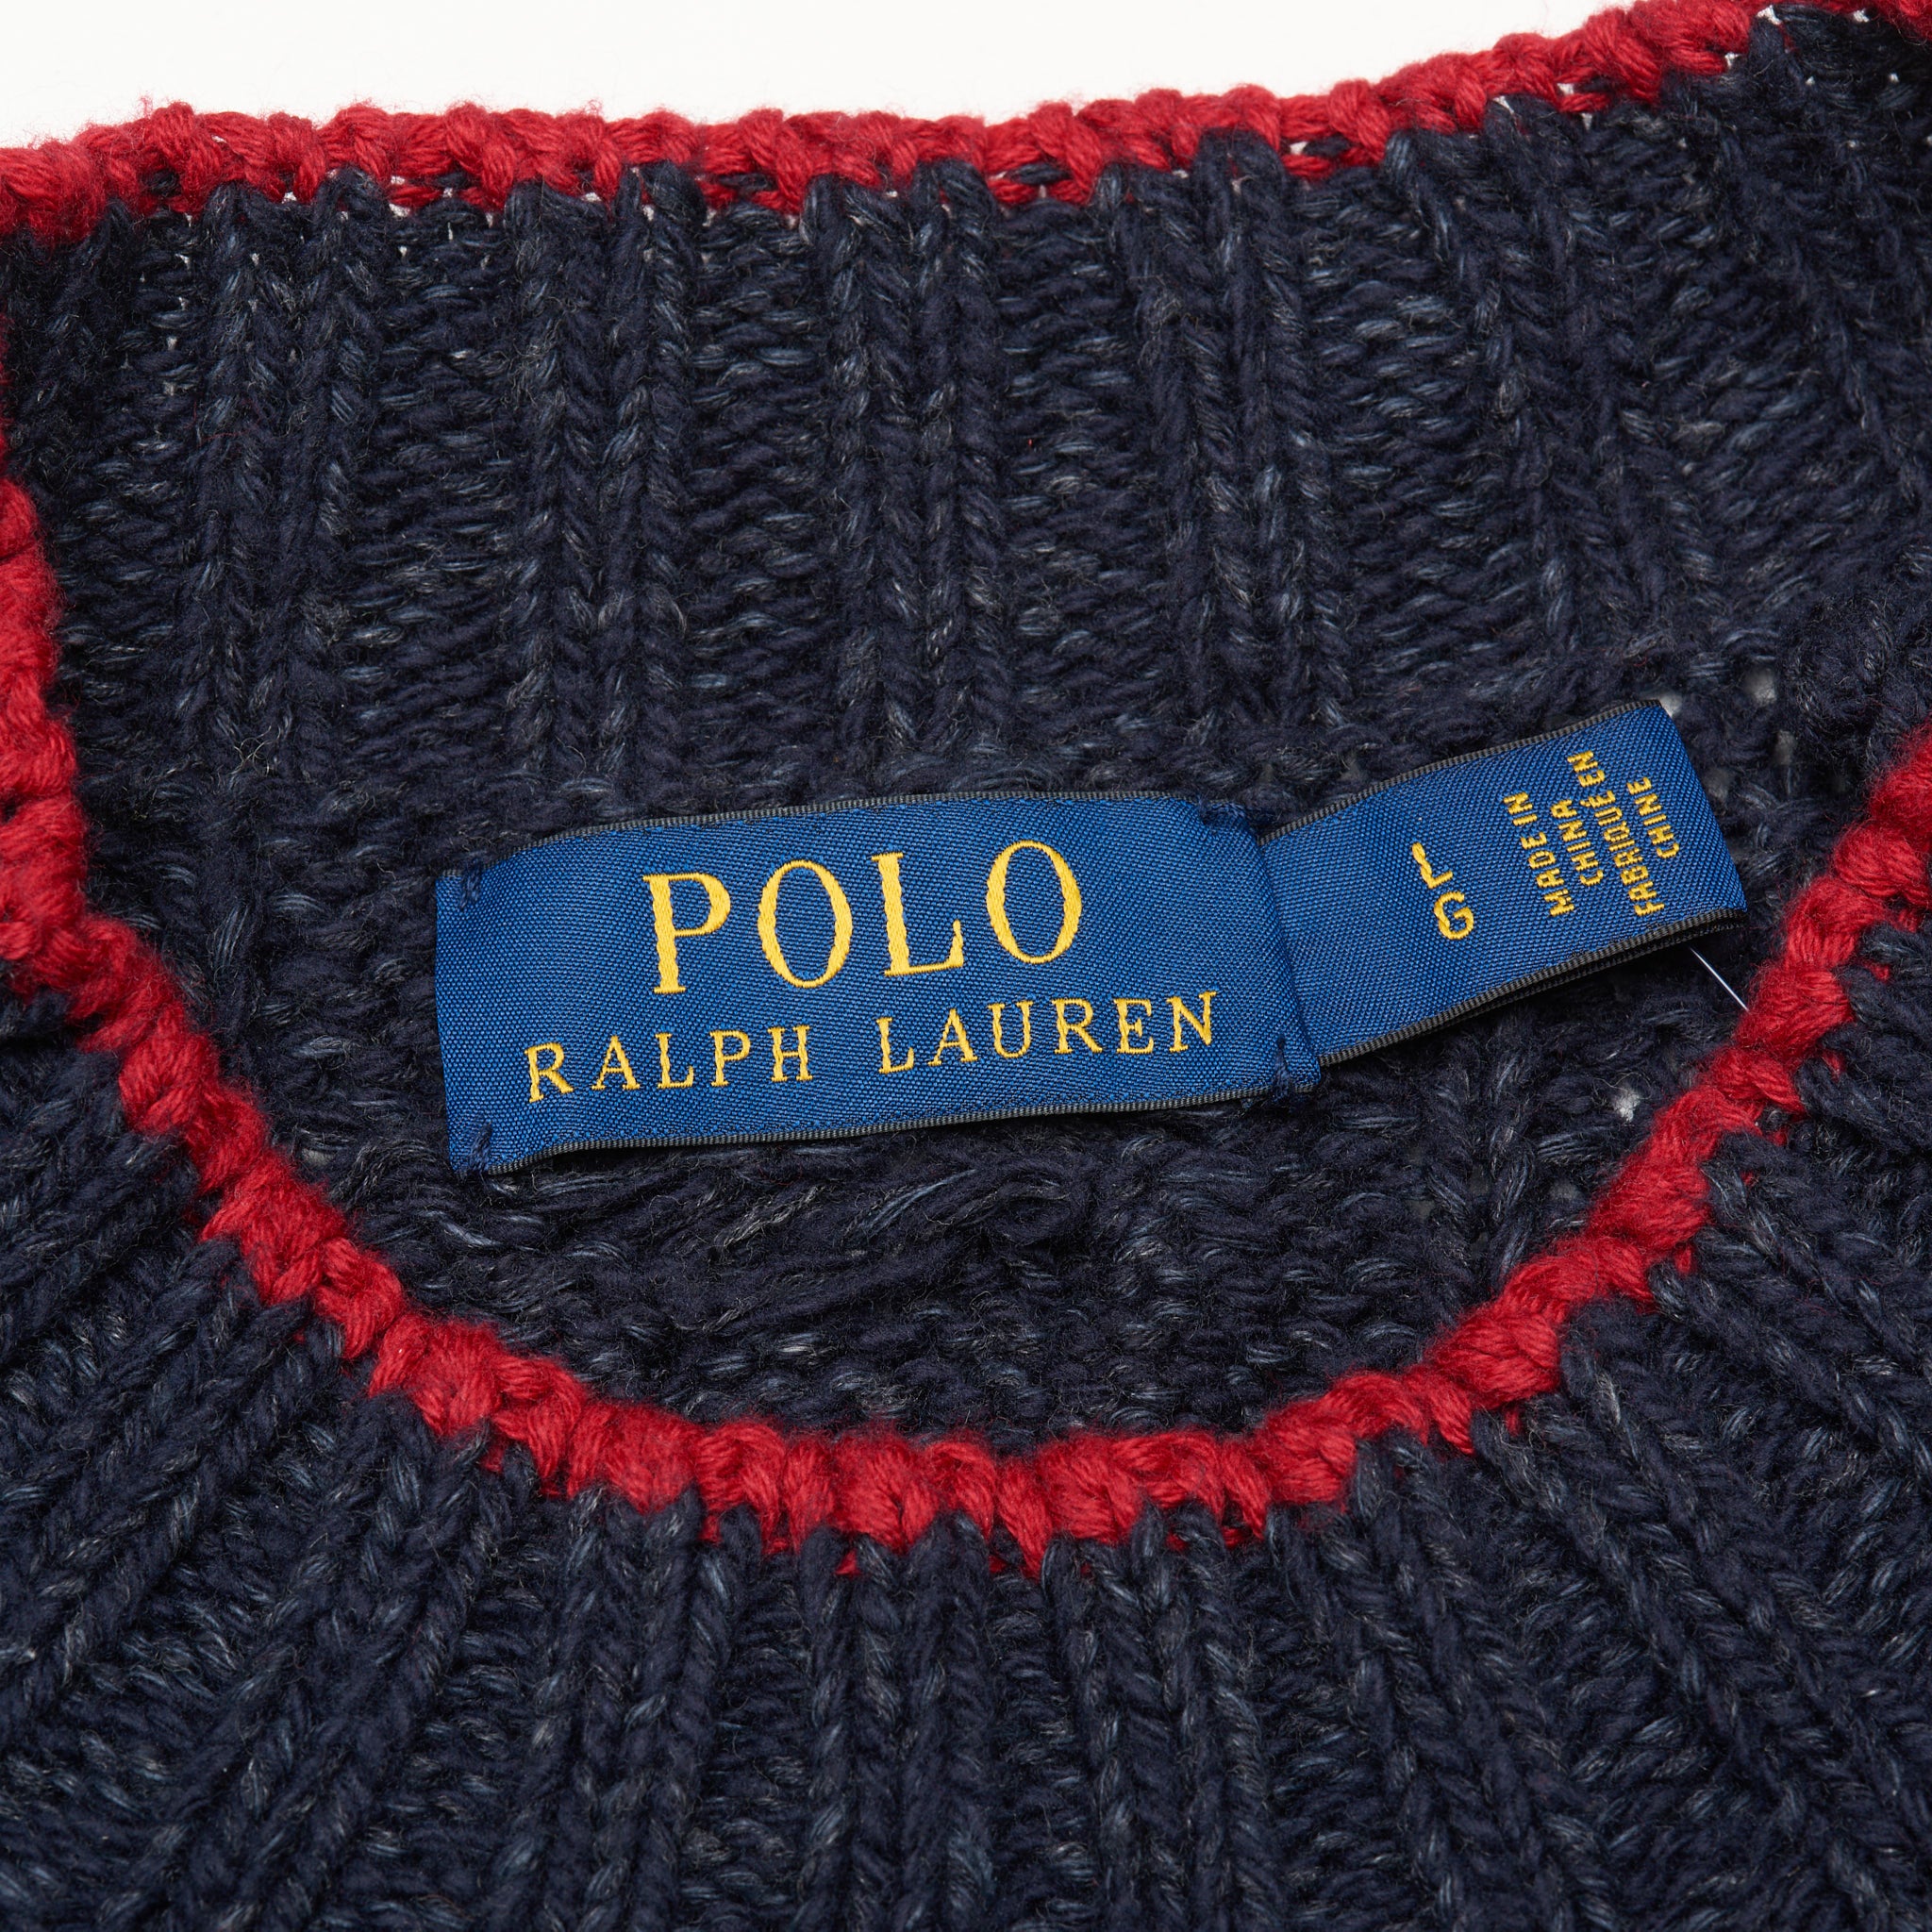 POLO RALPH LAUREN Navy Blue Cable Knit Crewneck Sweater Navy Badge NEW US L RALPH LAUREN